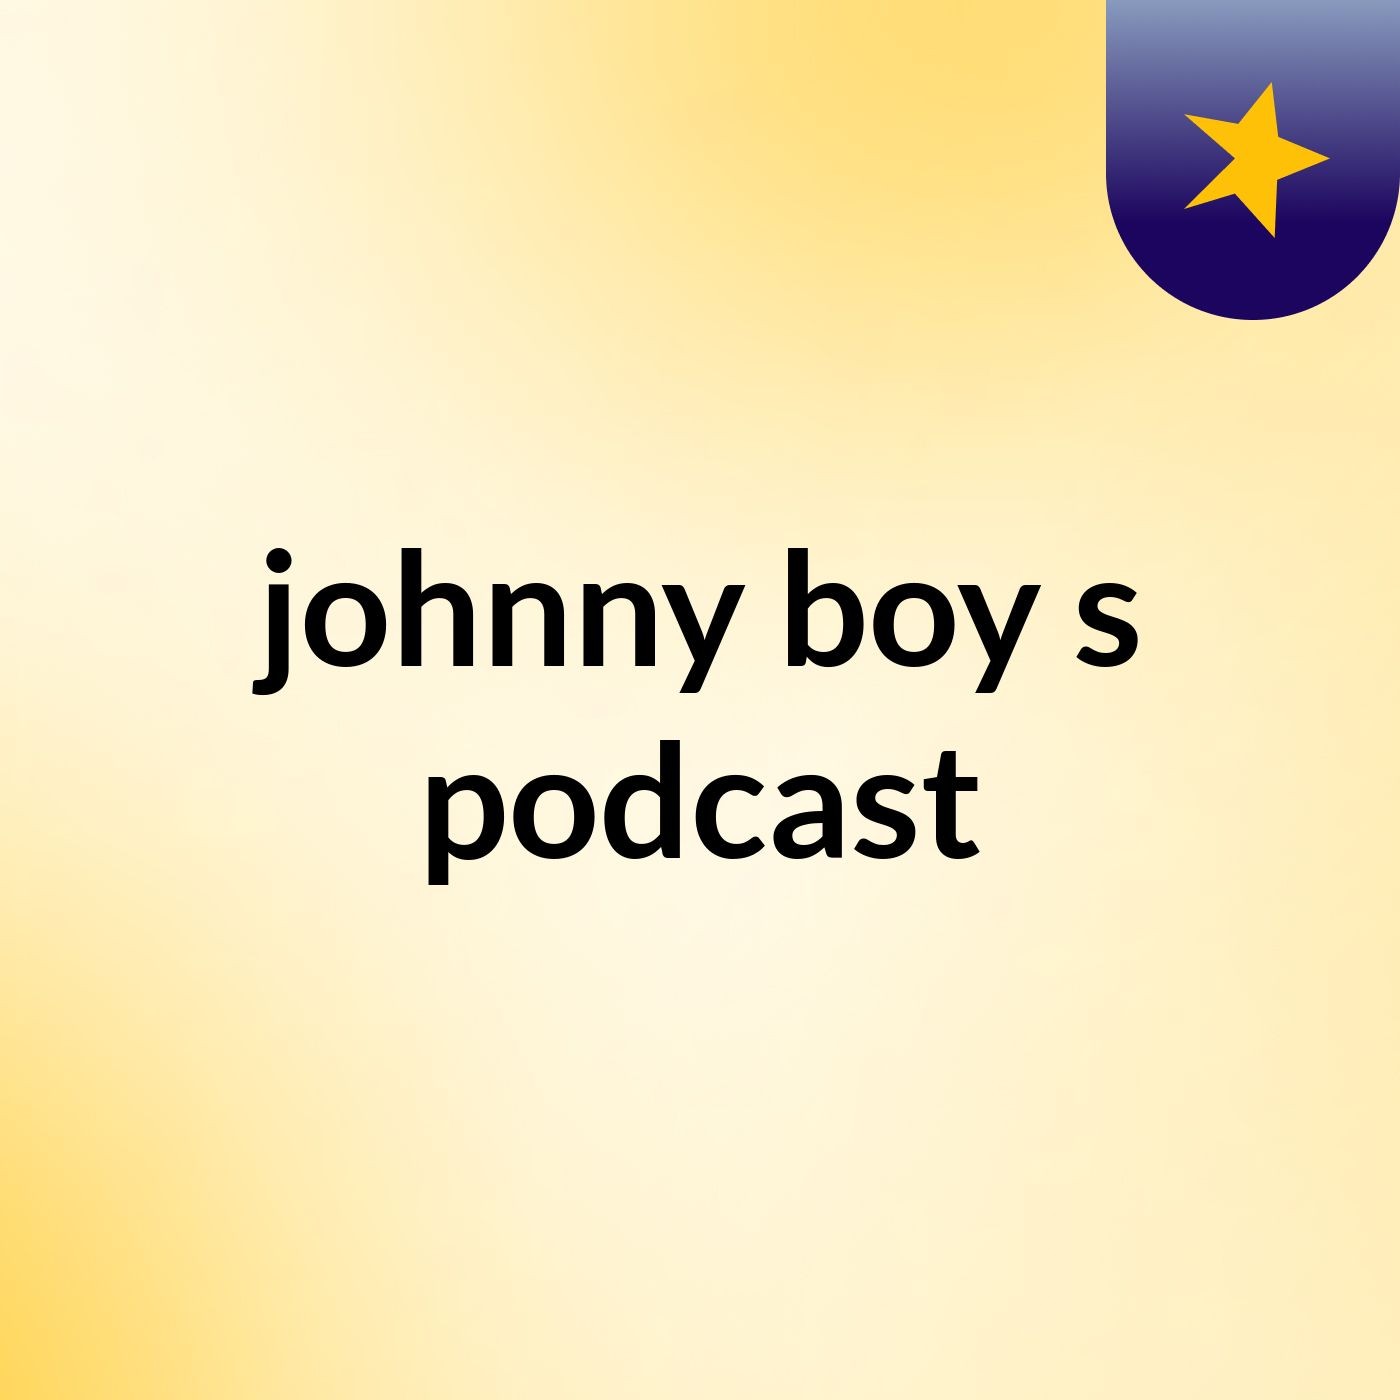 Episode 2 - johnny boy's podcast